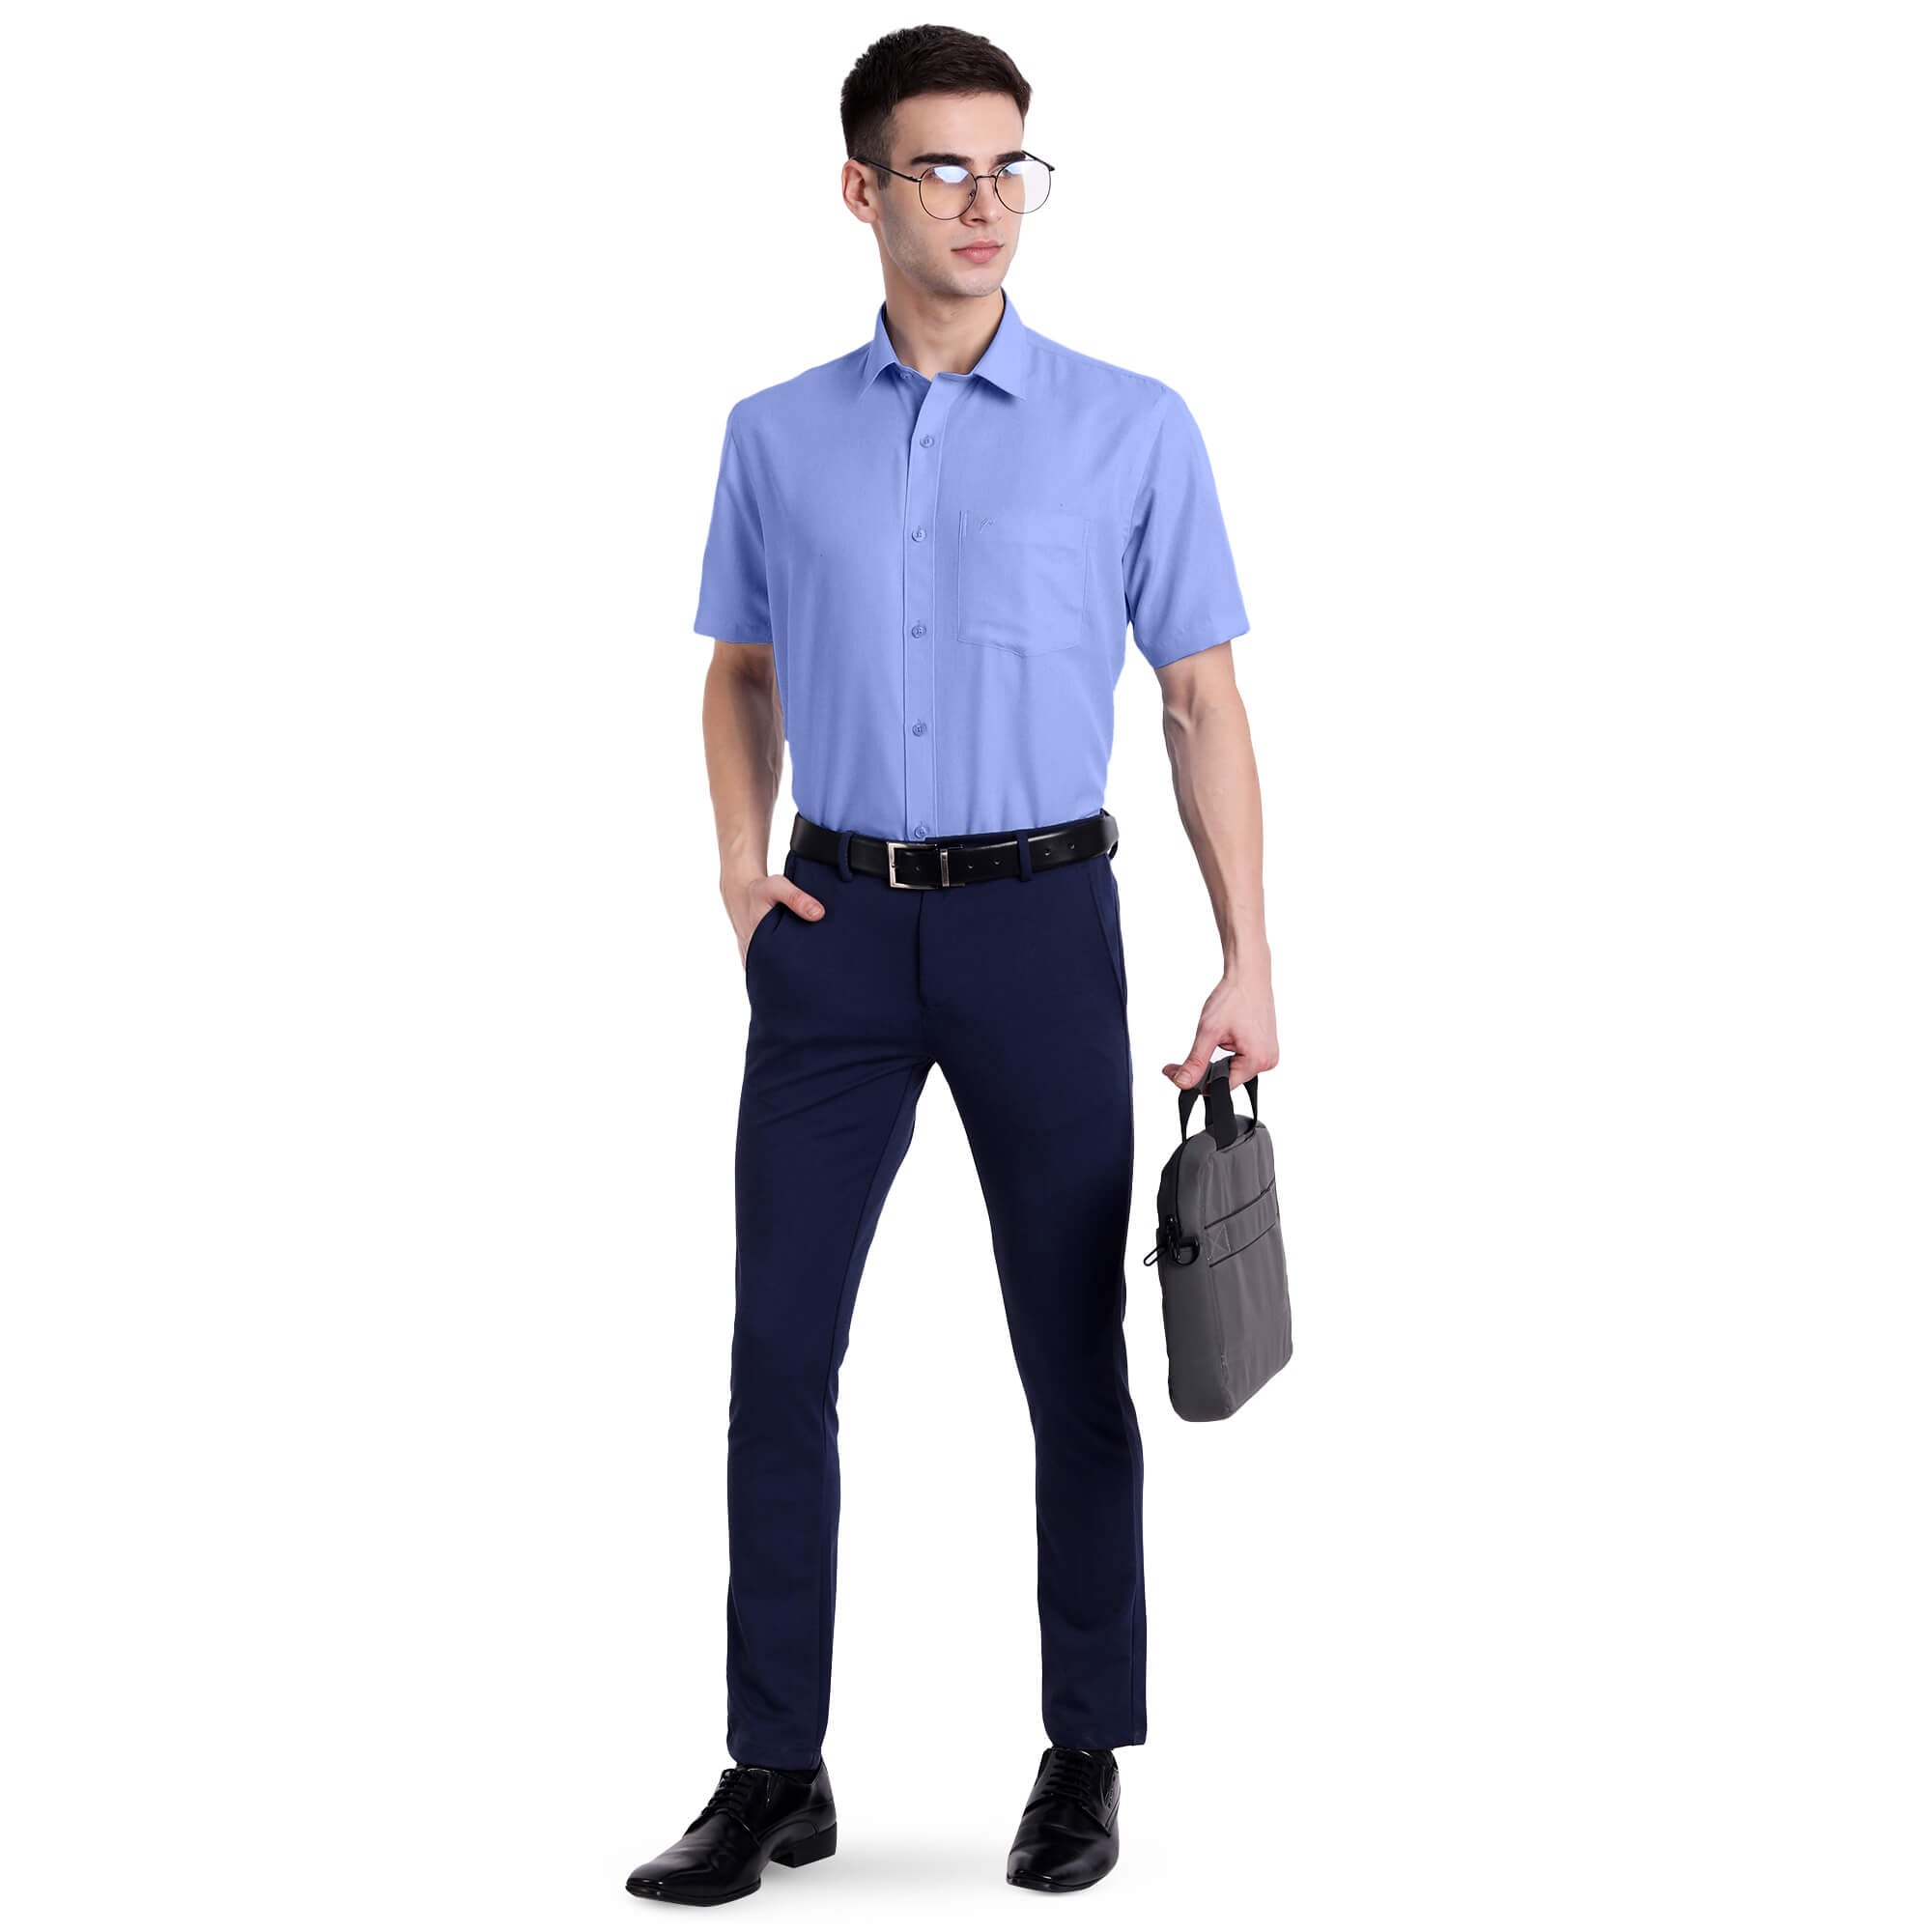 Poomer Elite Colour Shirt - Lavender